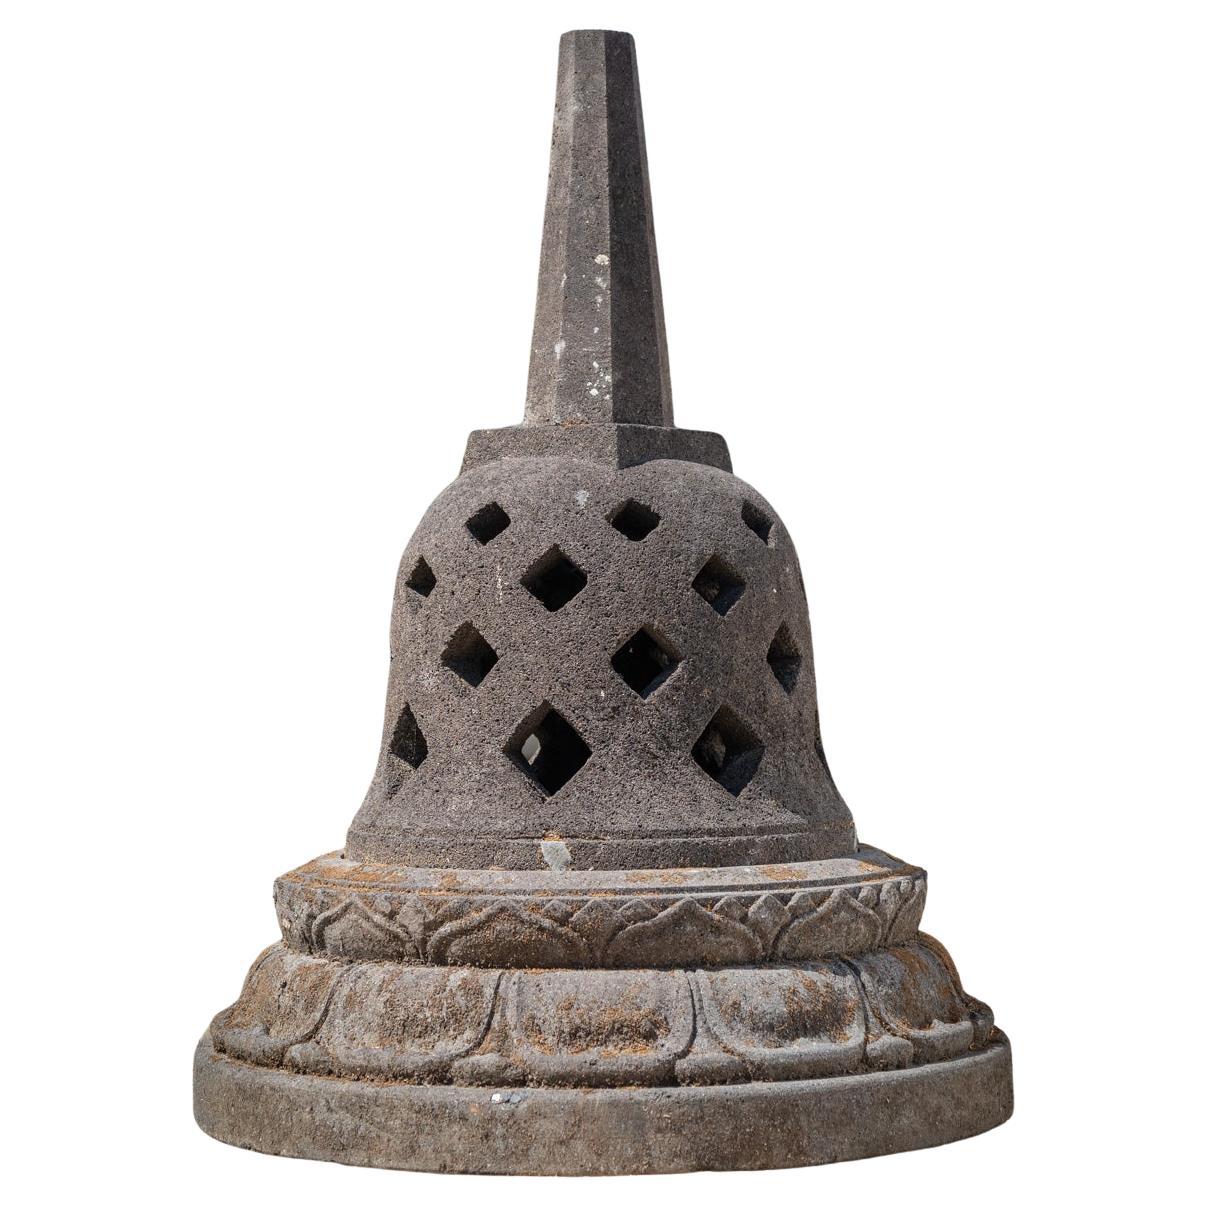 Middle 20th century old lavastone Stupa from Indonesia  OriginalBuddhas